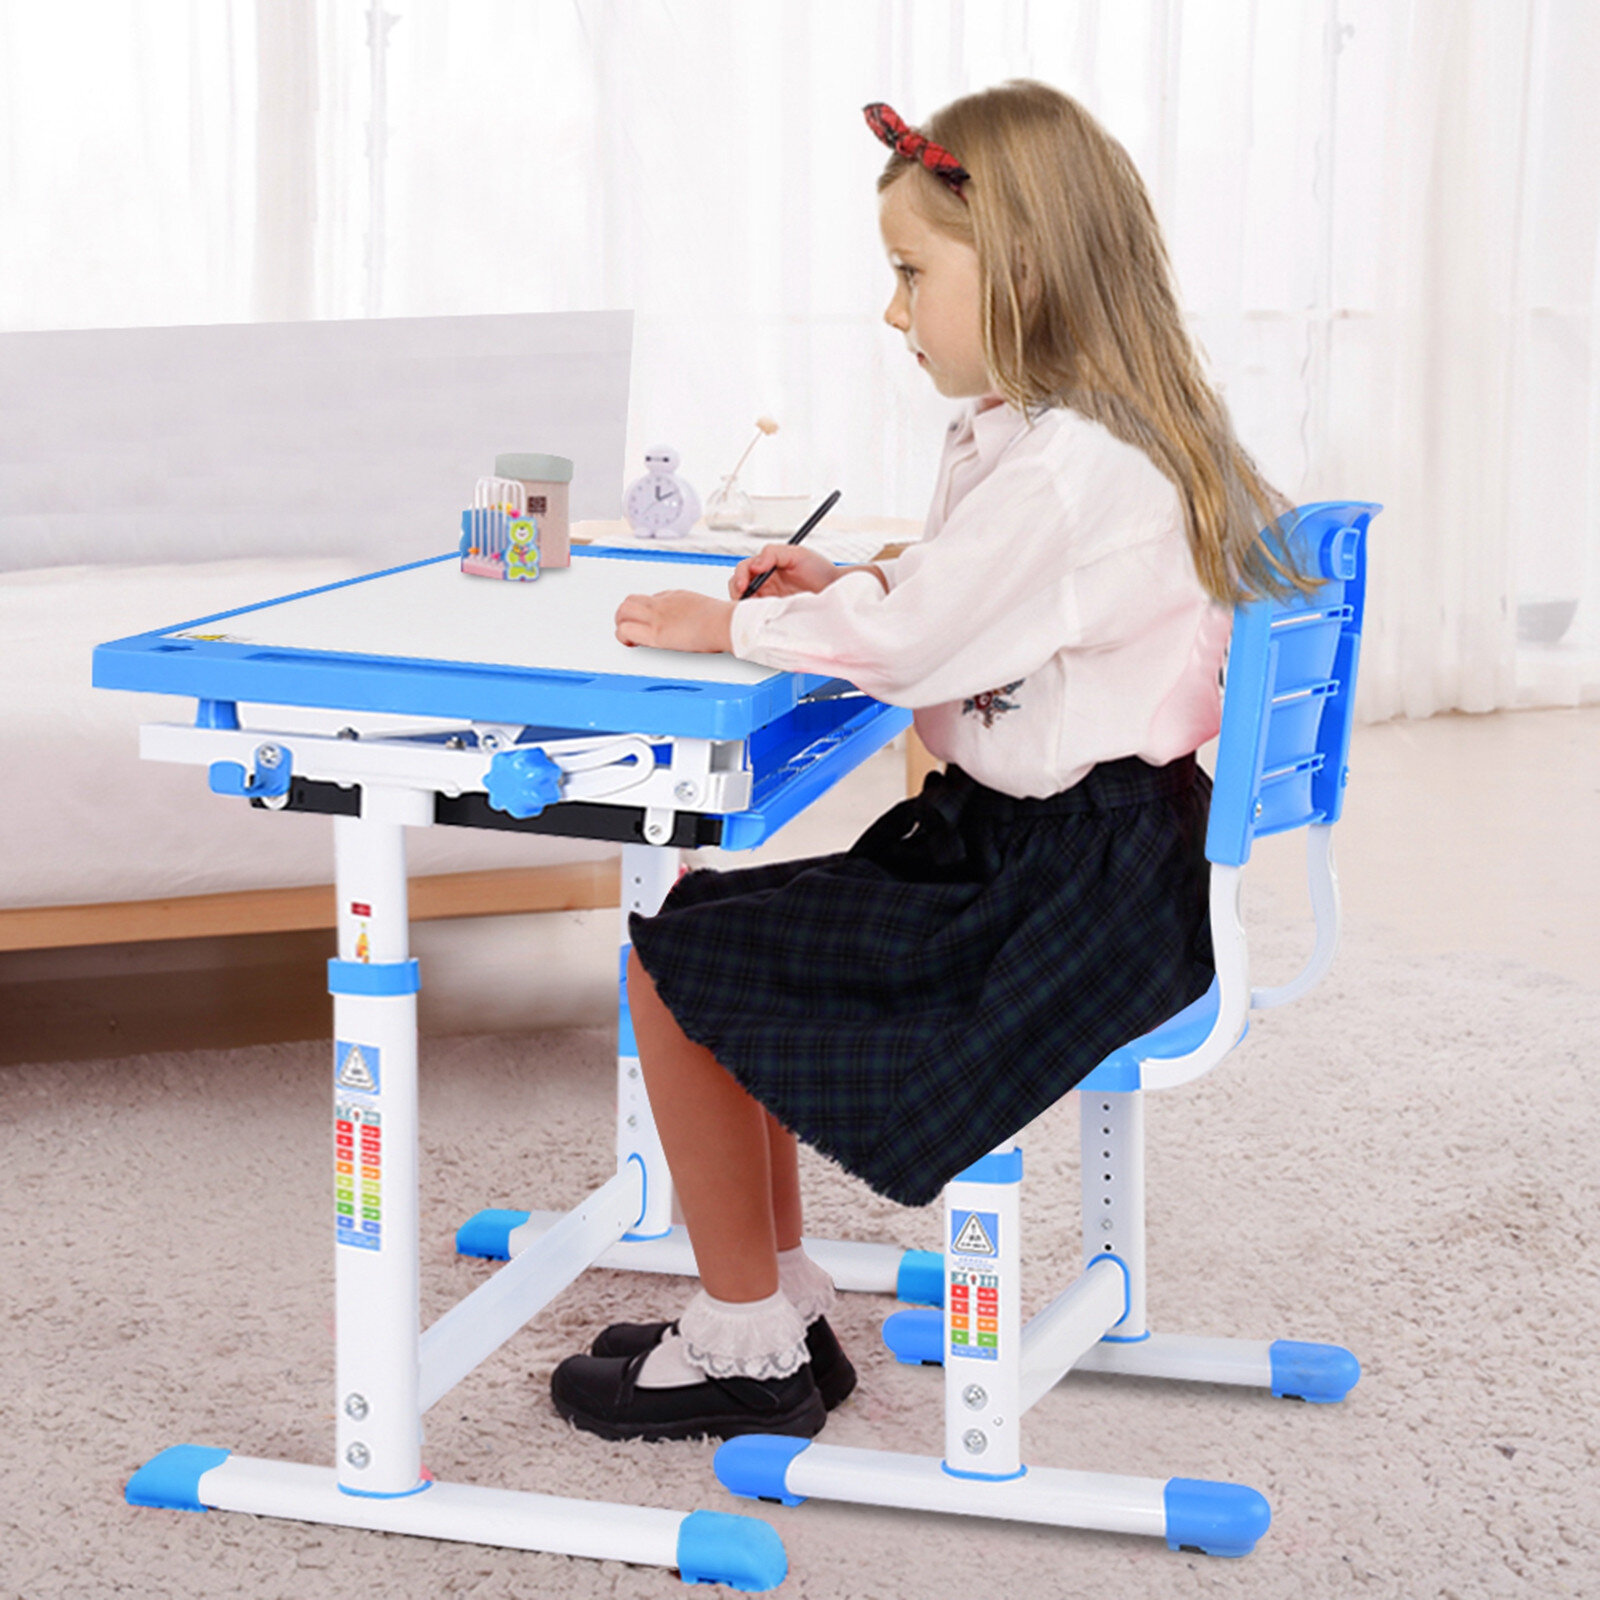 Children Desk Kids Study School Adjustable Height Table Chair Set with Storage 